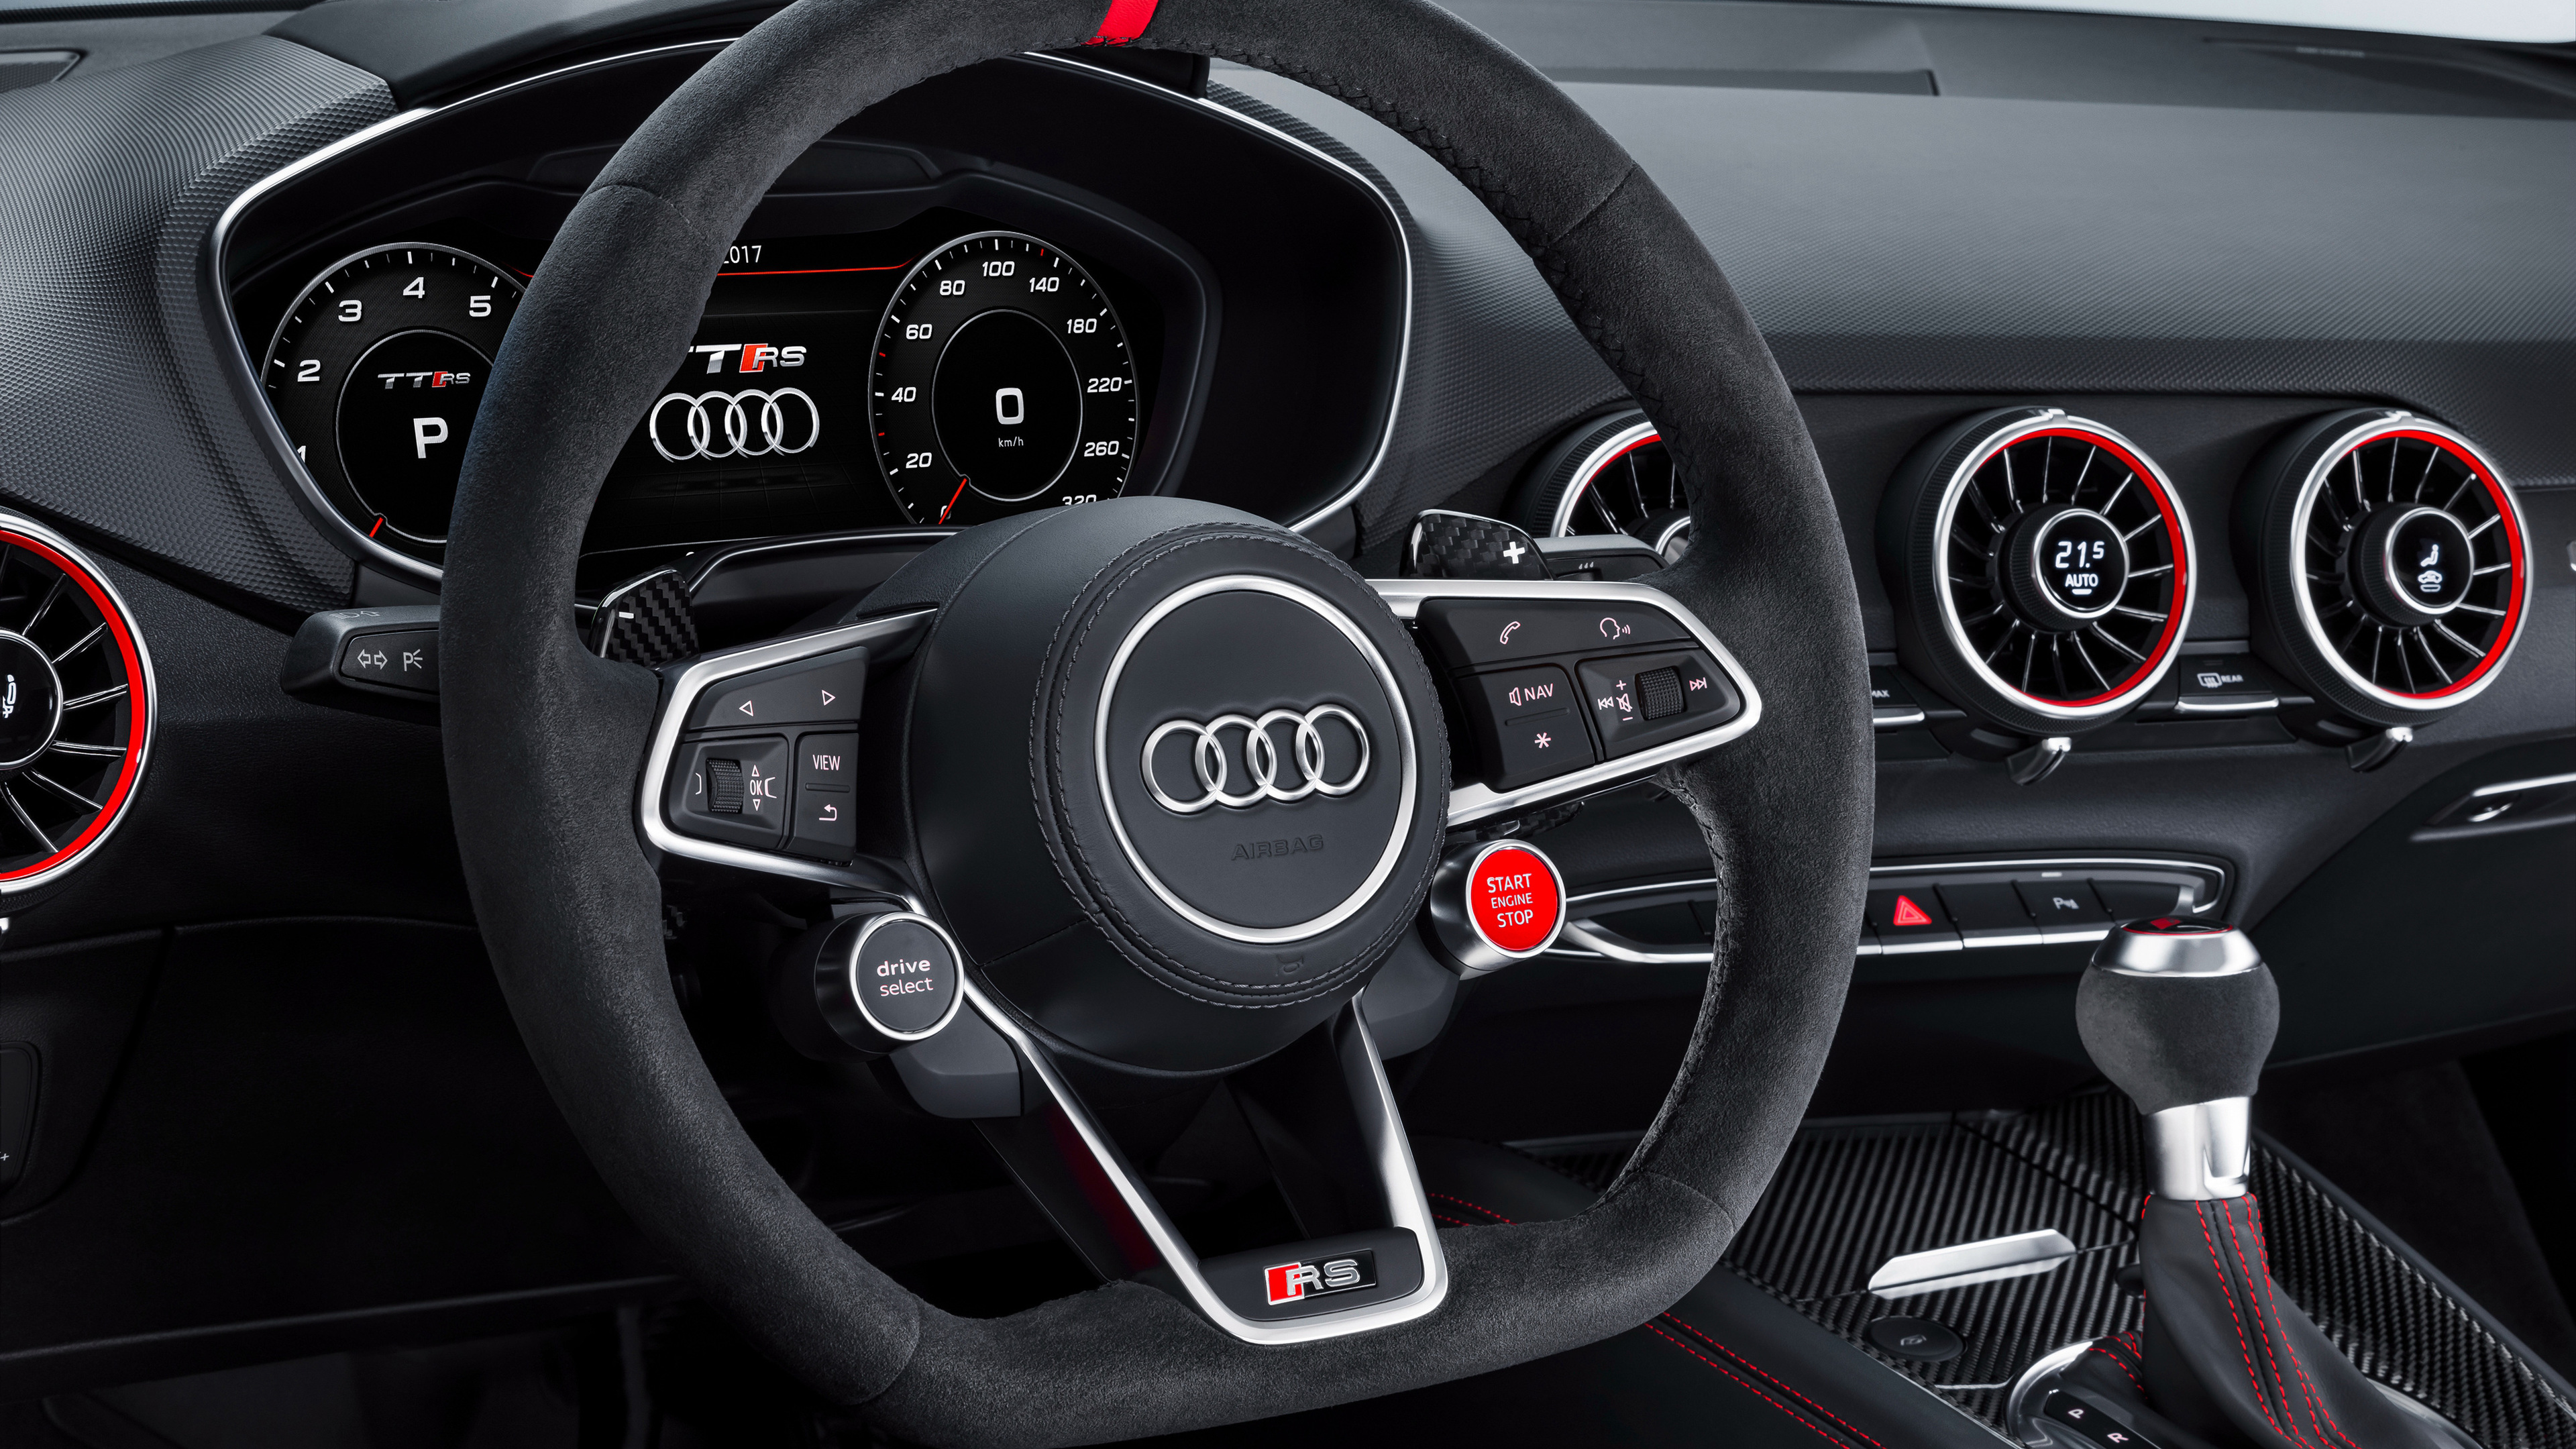 Audi Tt Rs 2017 Interior Audi Tt 2017 Interior 3840x2160 Wallpaper Teahub Io